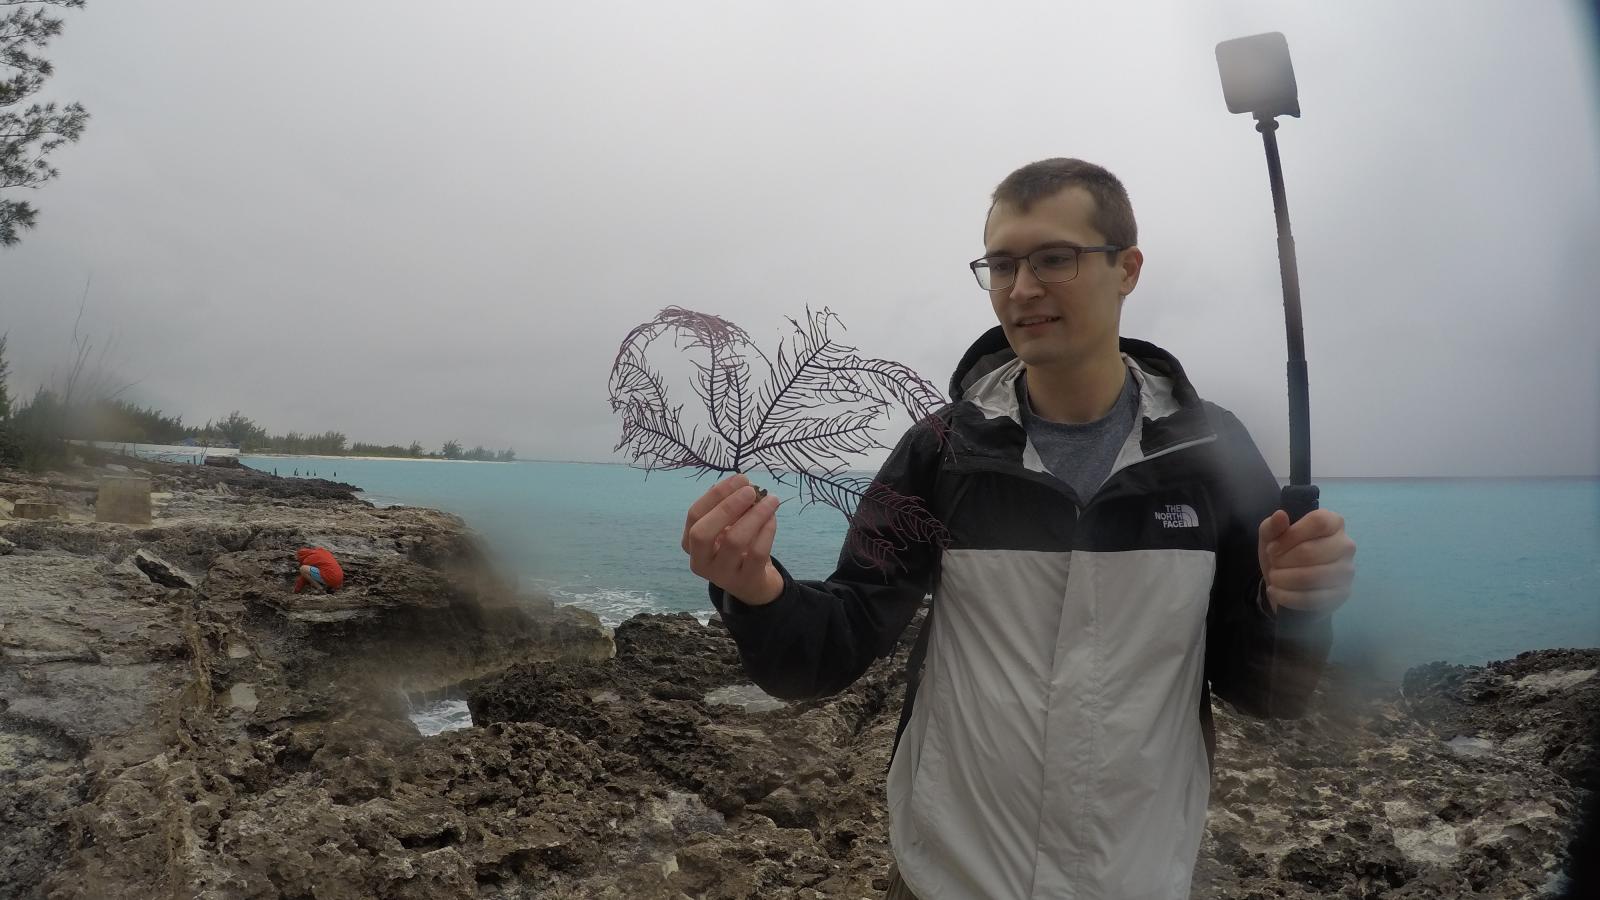 Prescott Vayda examines algae on the beach while holding a gopro on a rainy day